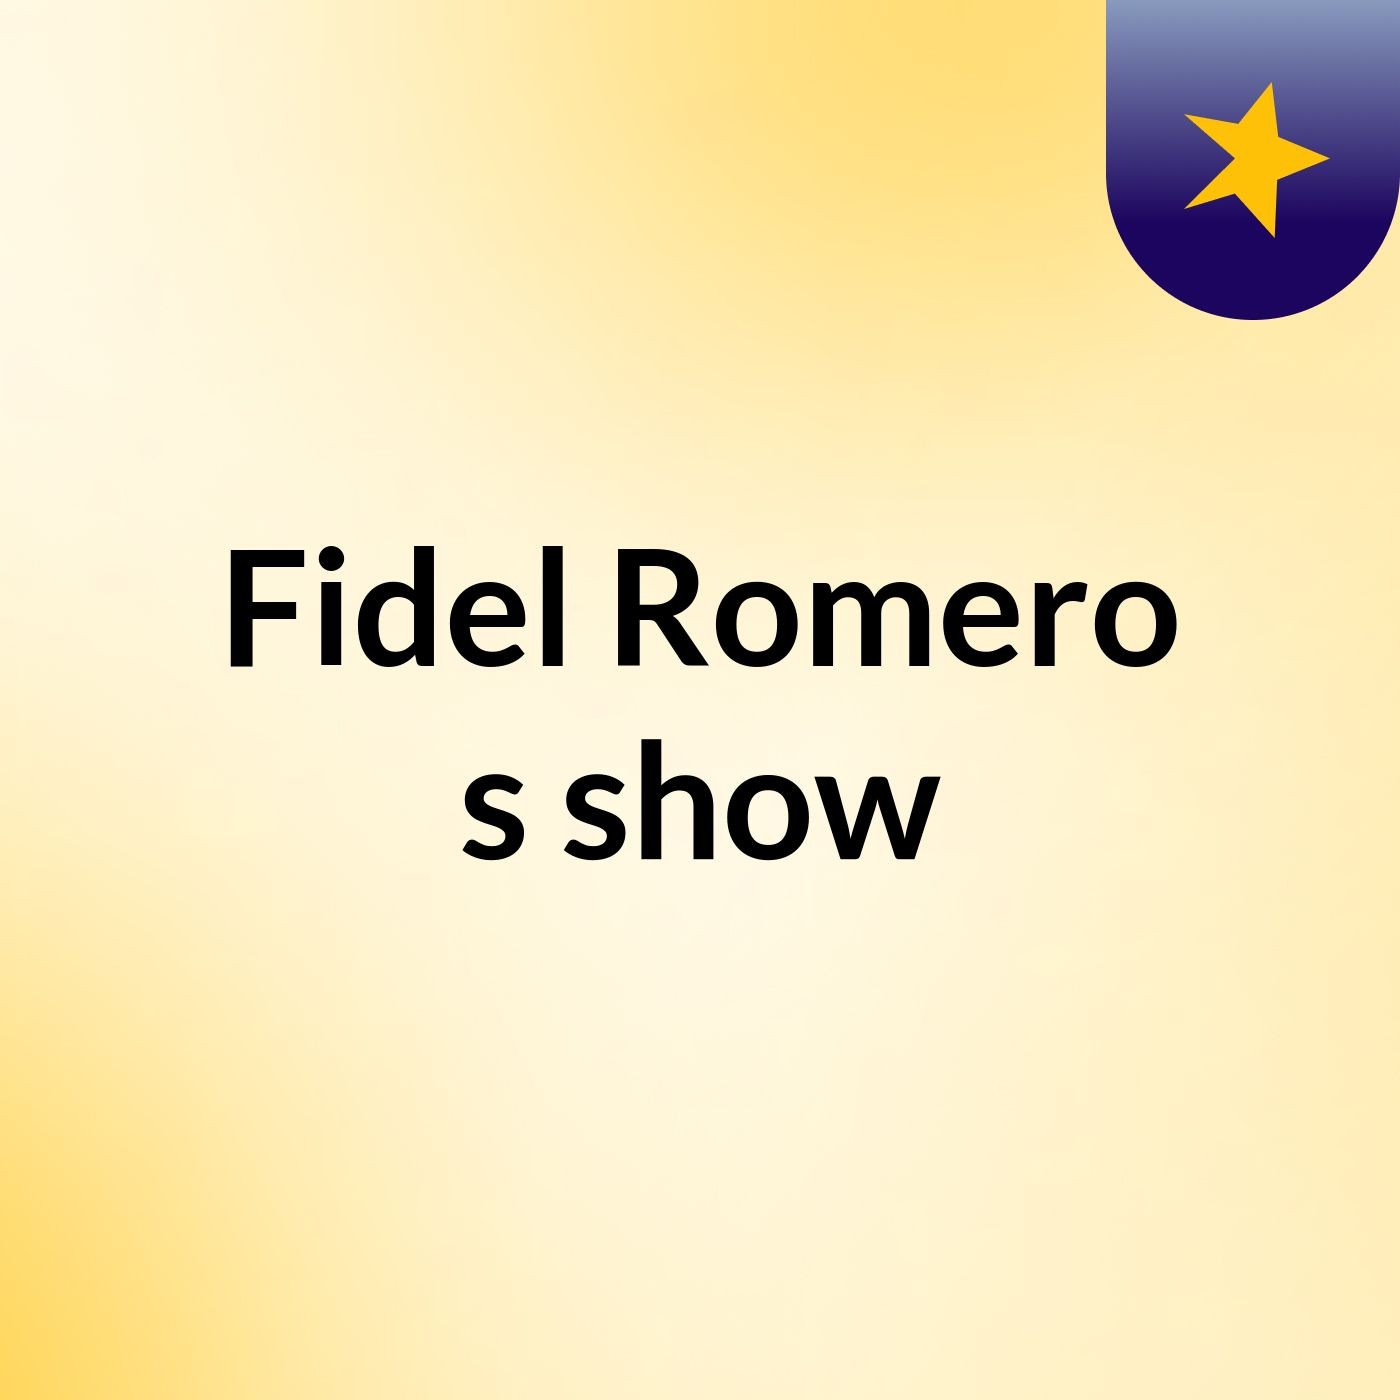 Fidel Romero's show